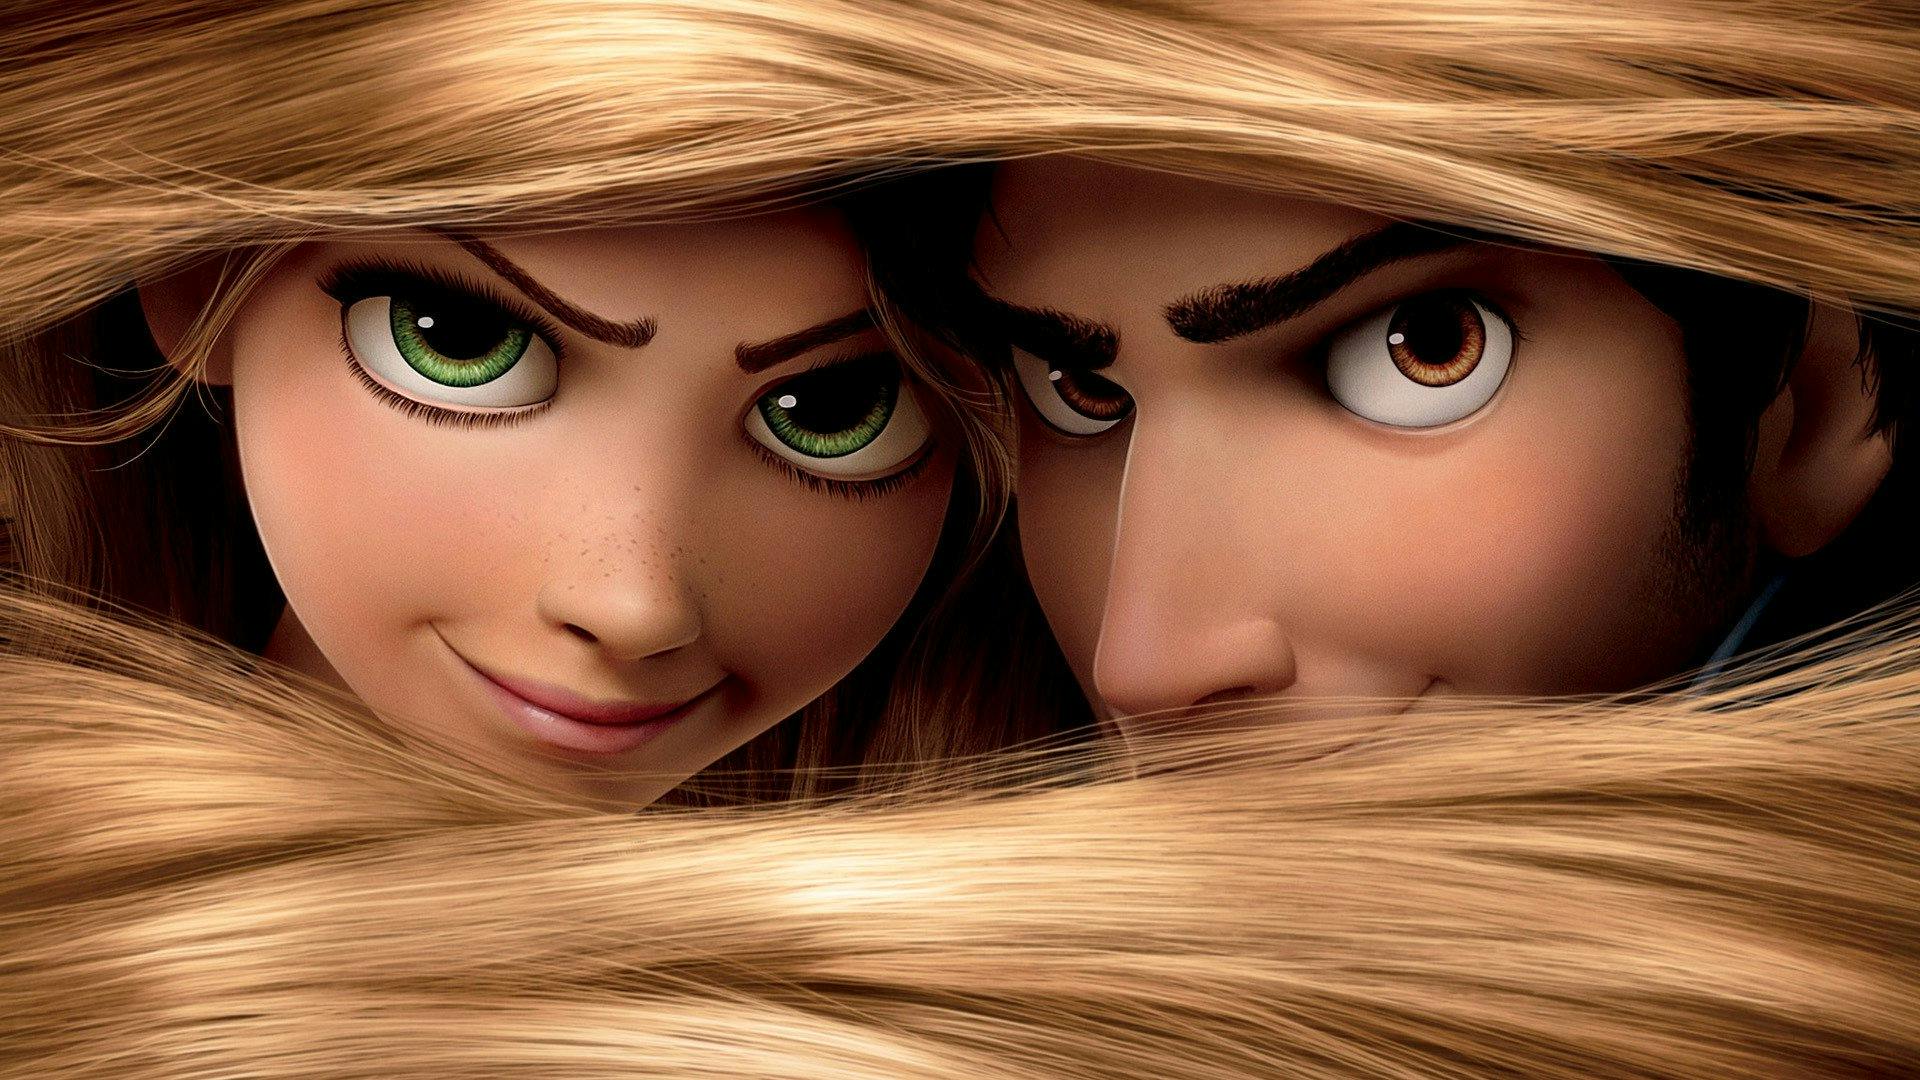 Disney gets a bit 'Tangled' up in Rapunzel tale